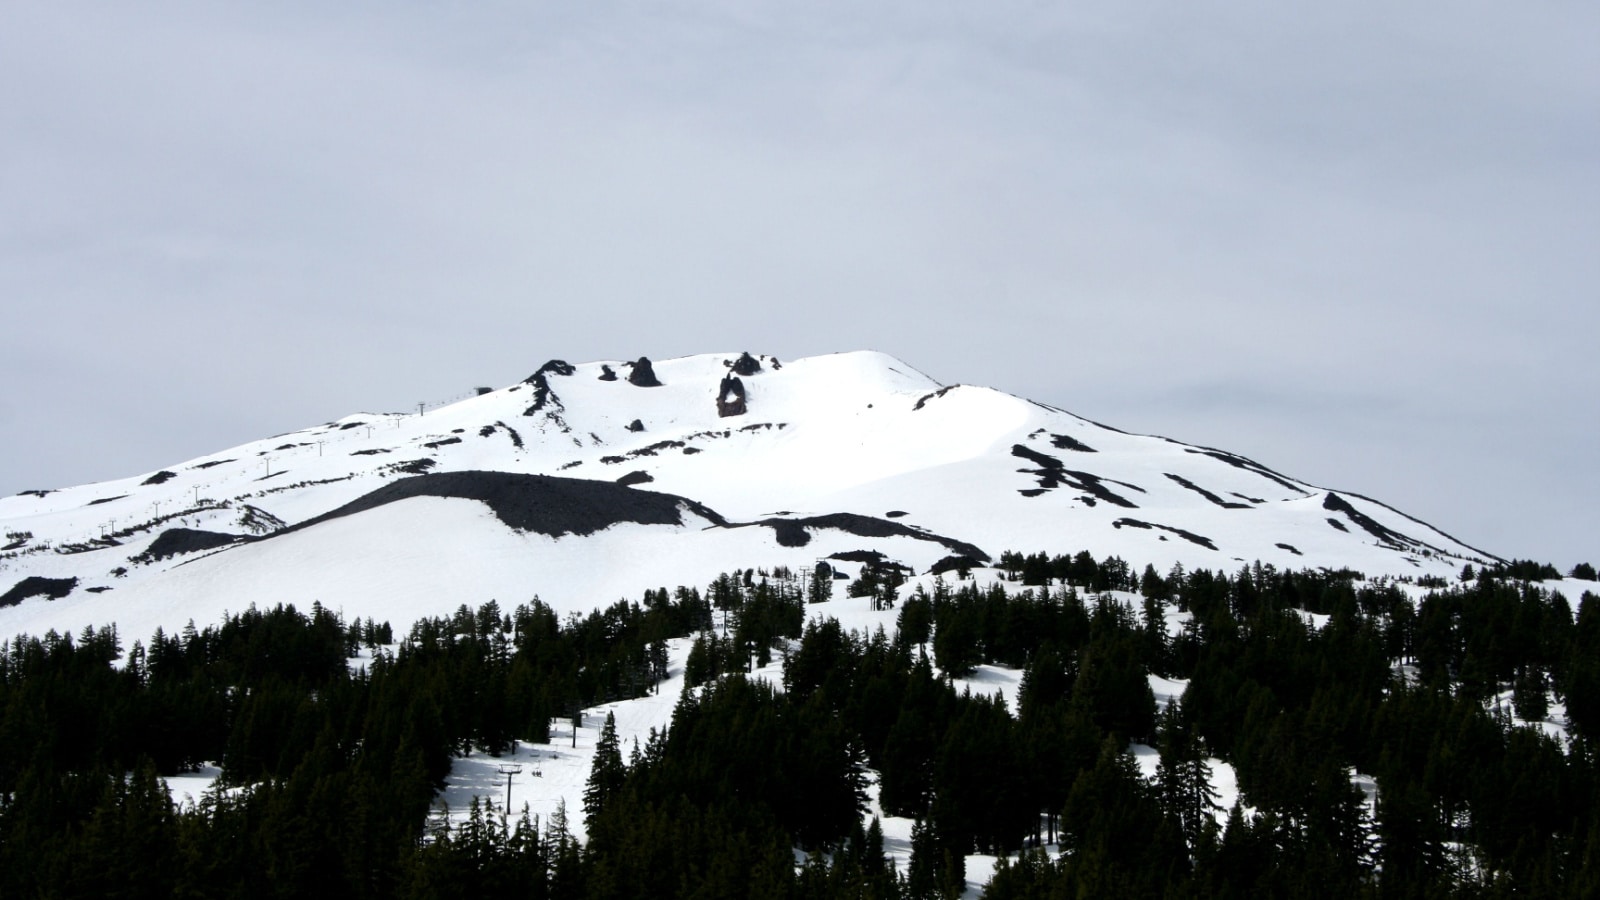 Mt Bachelor, snow caped mountain ski resort in Bend Oregon